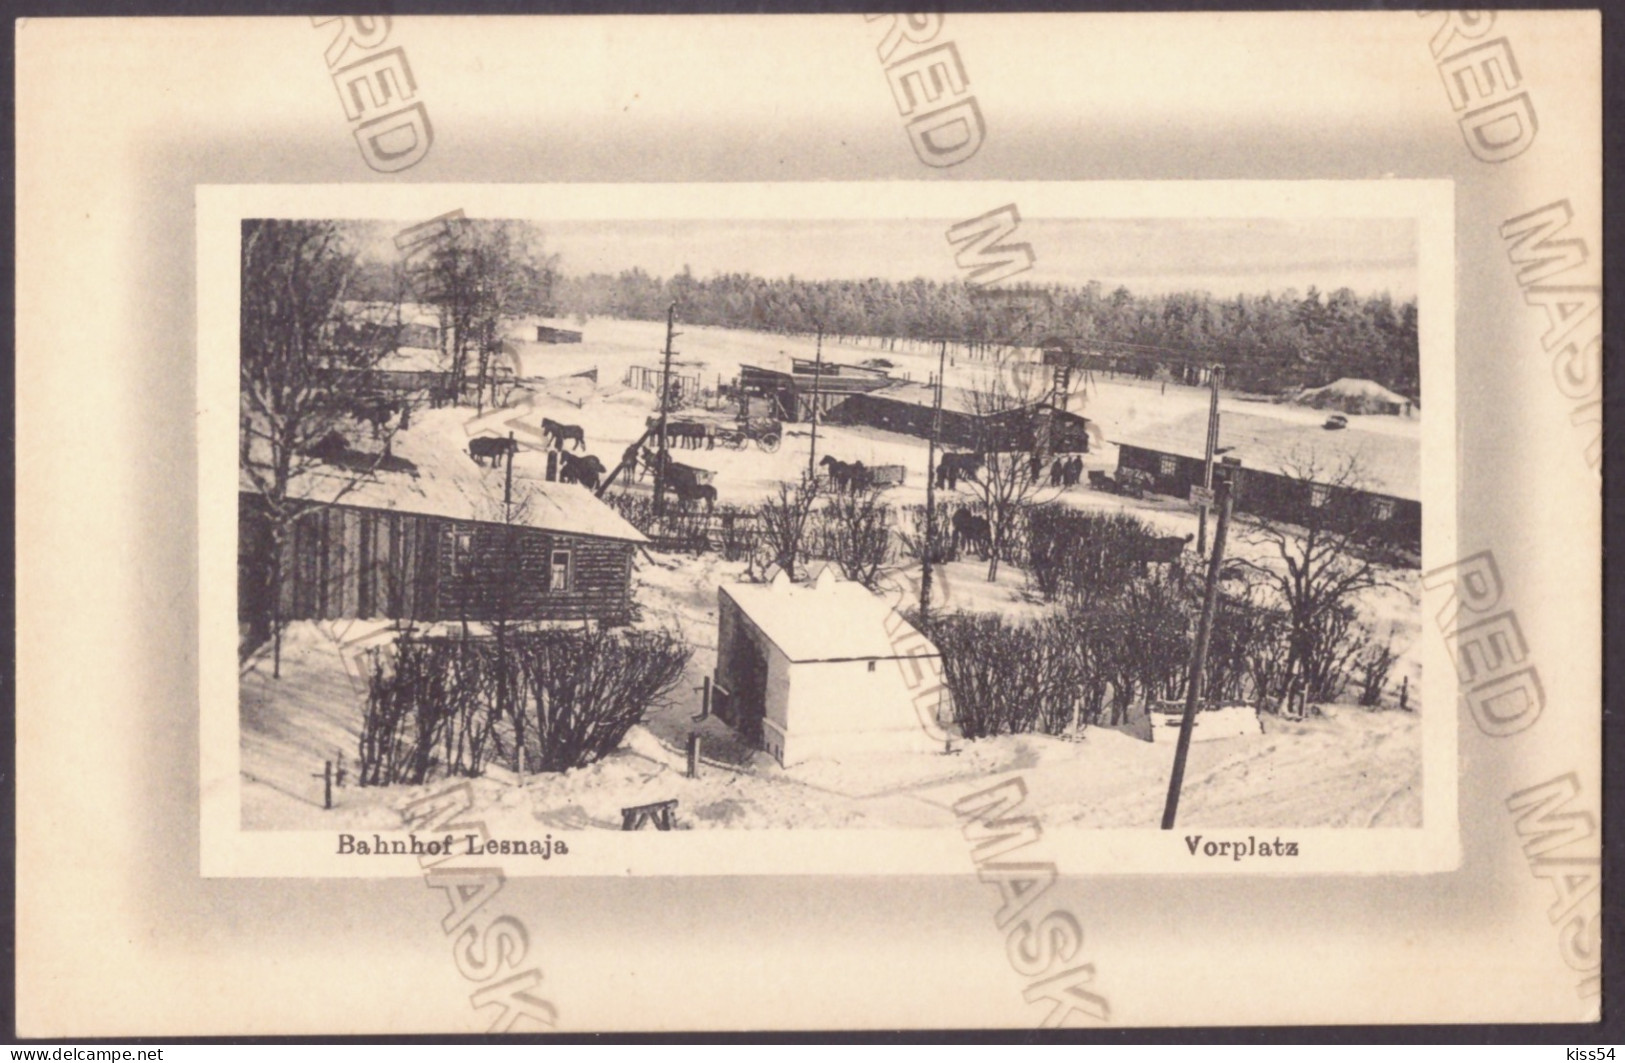 BL 32 - 25138 LYASNAYA, Railway Station, Belarus - Old Postcard - Used - Belarus